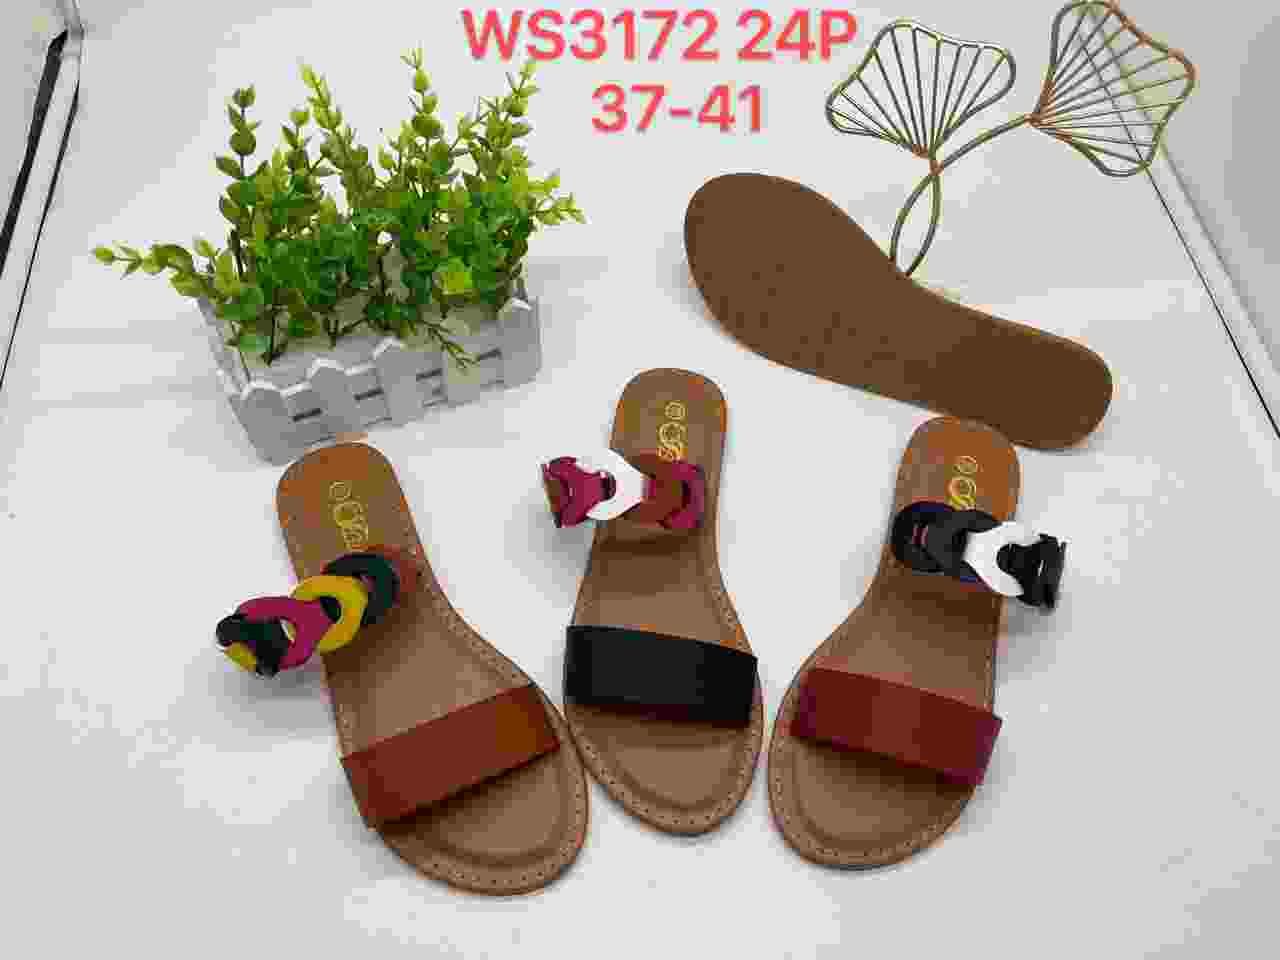 Ladies stylish Sandal shoes WS3172 24P